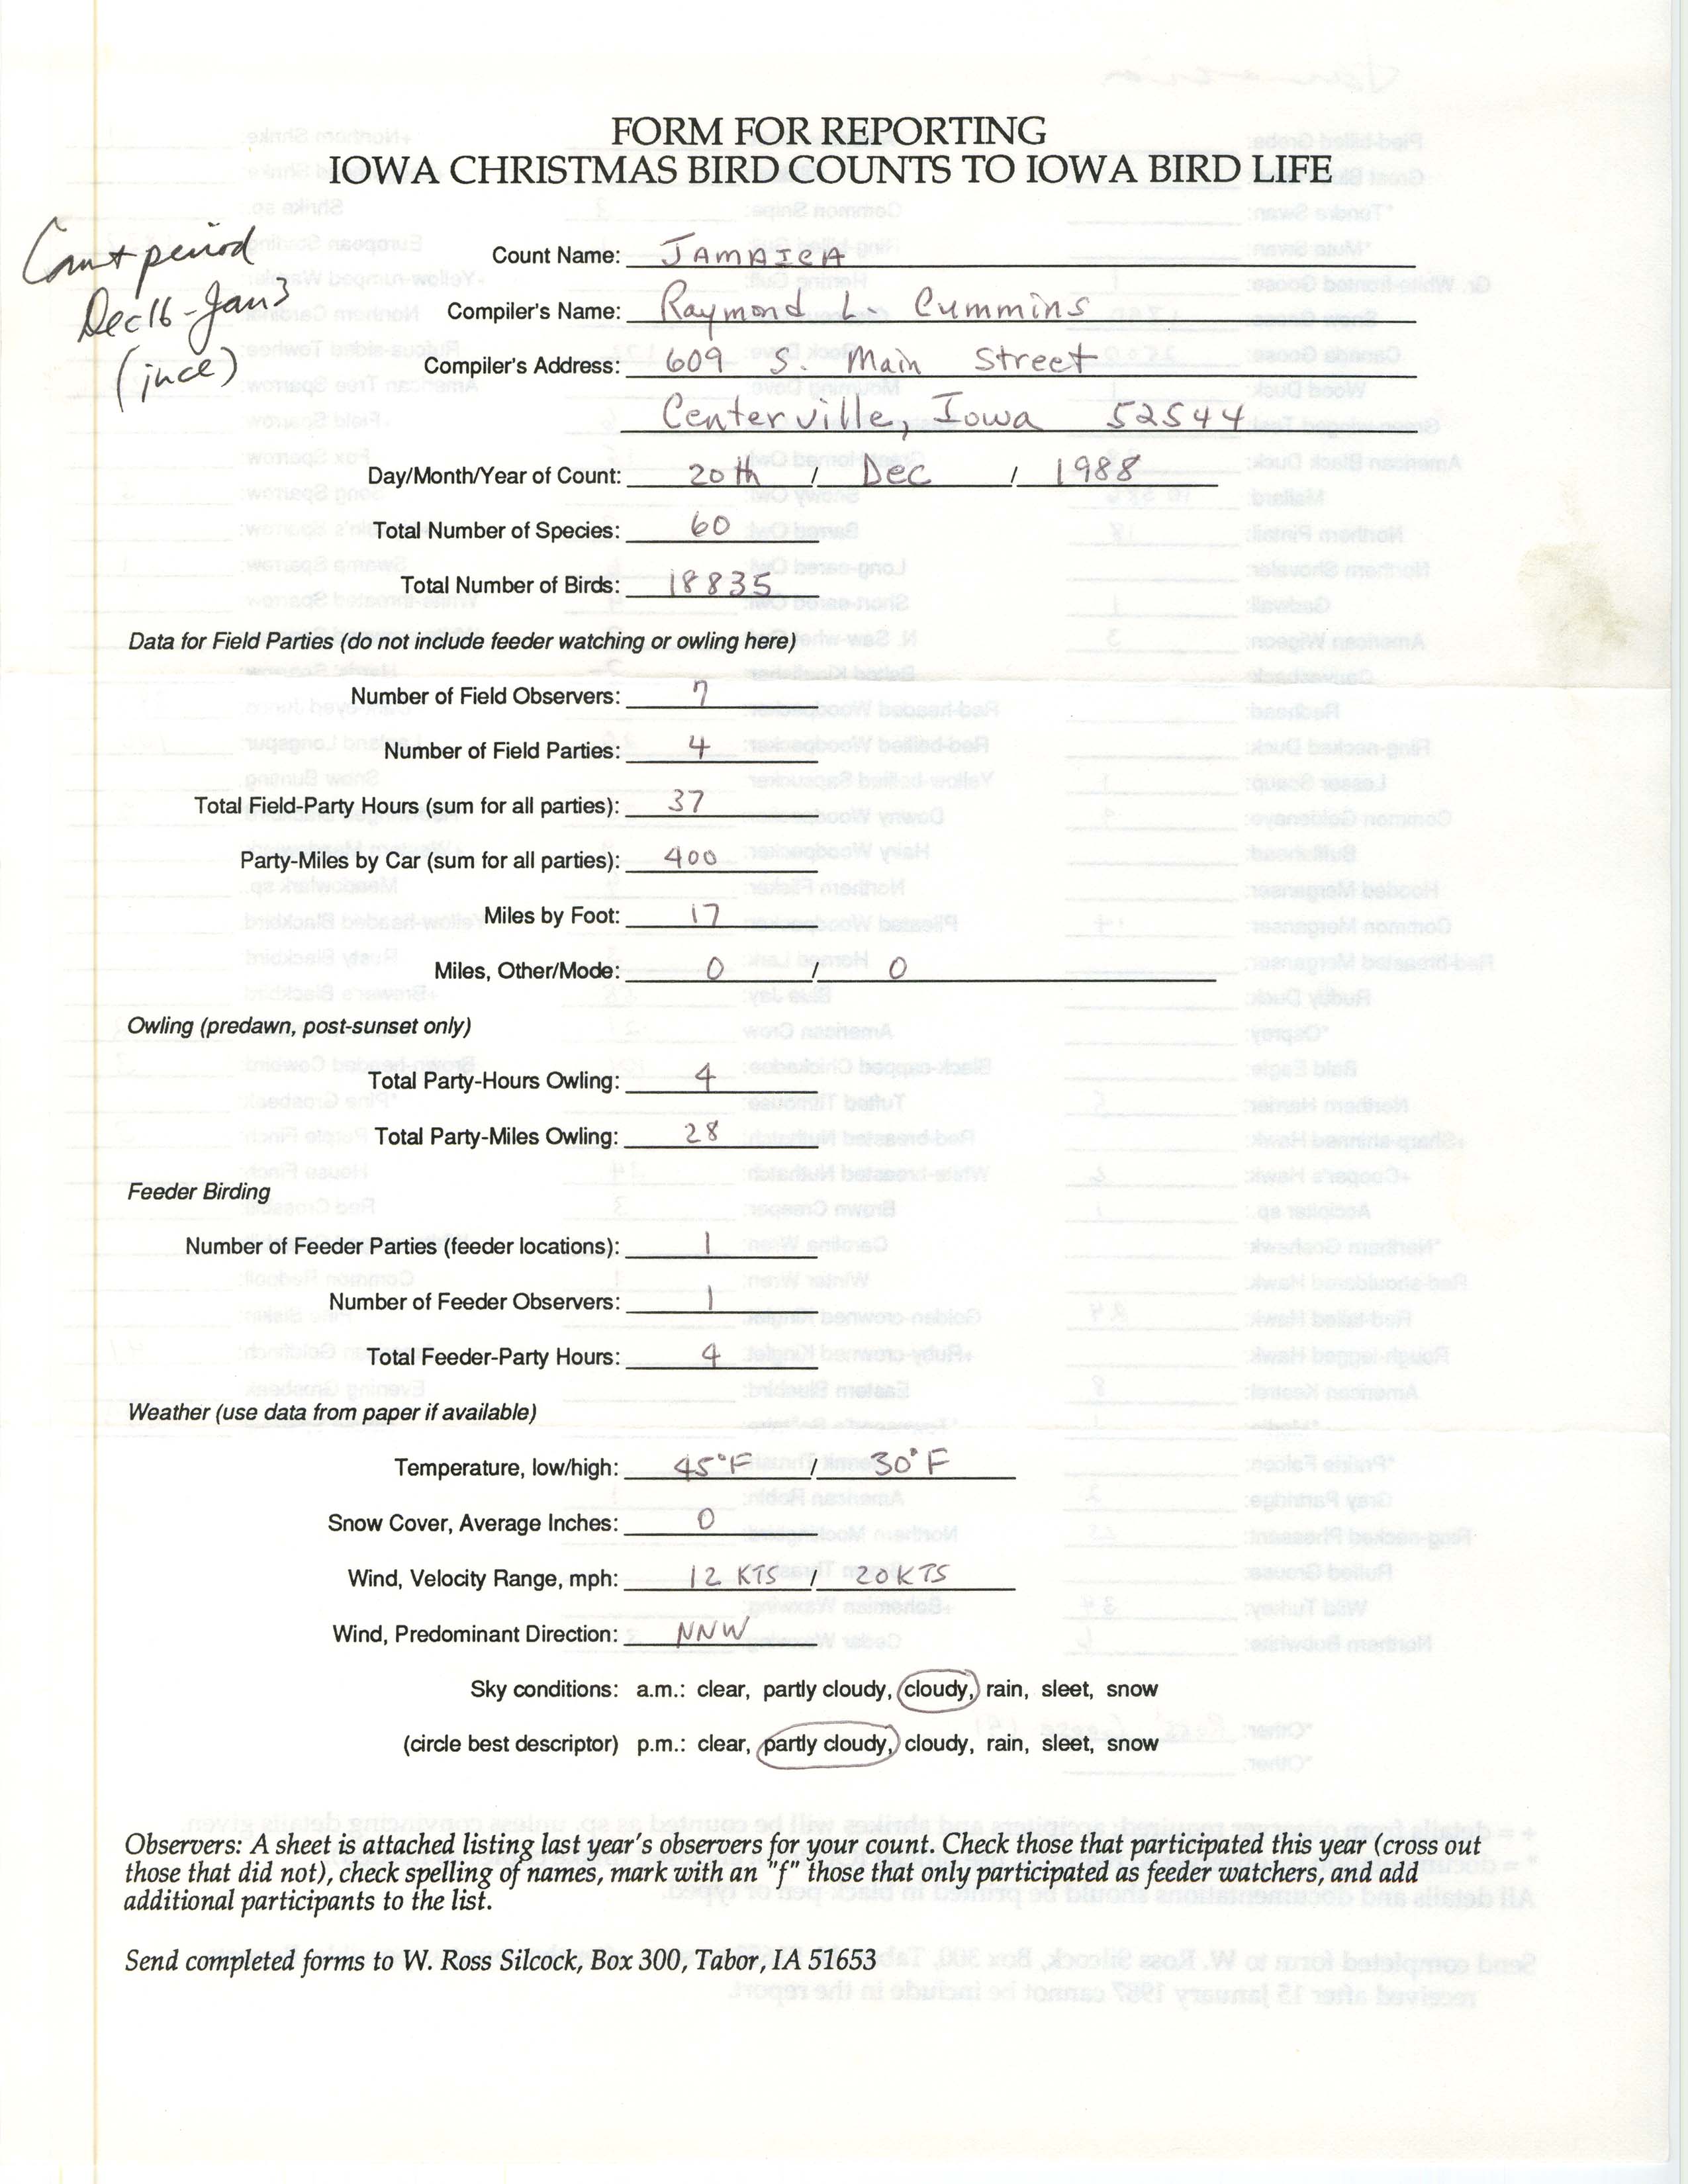 Form for reporting Iowa Christmas bird counts to Iowa Bird Life, Raymond L. Cummins, December 20, 1988